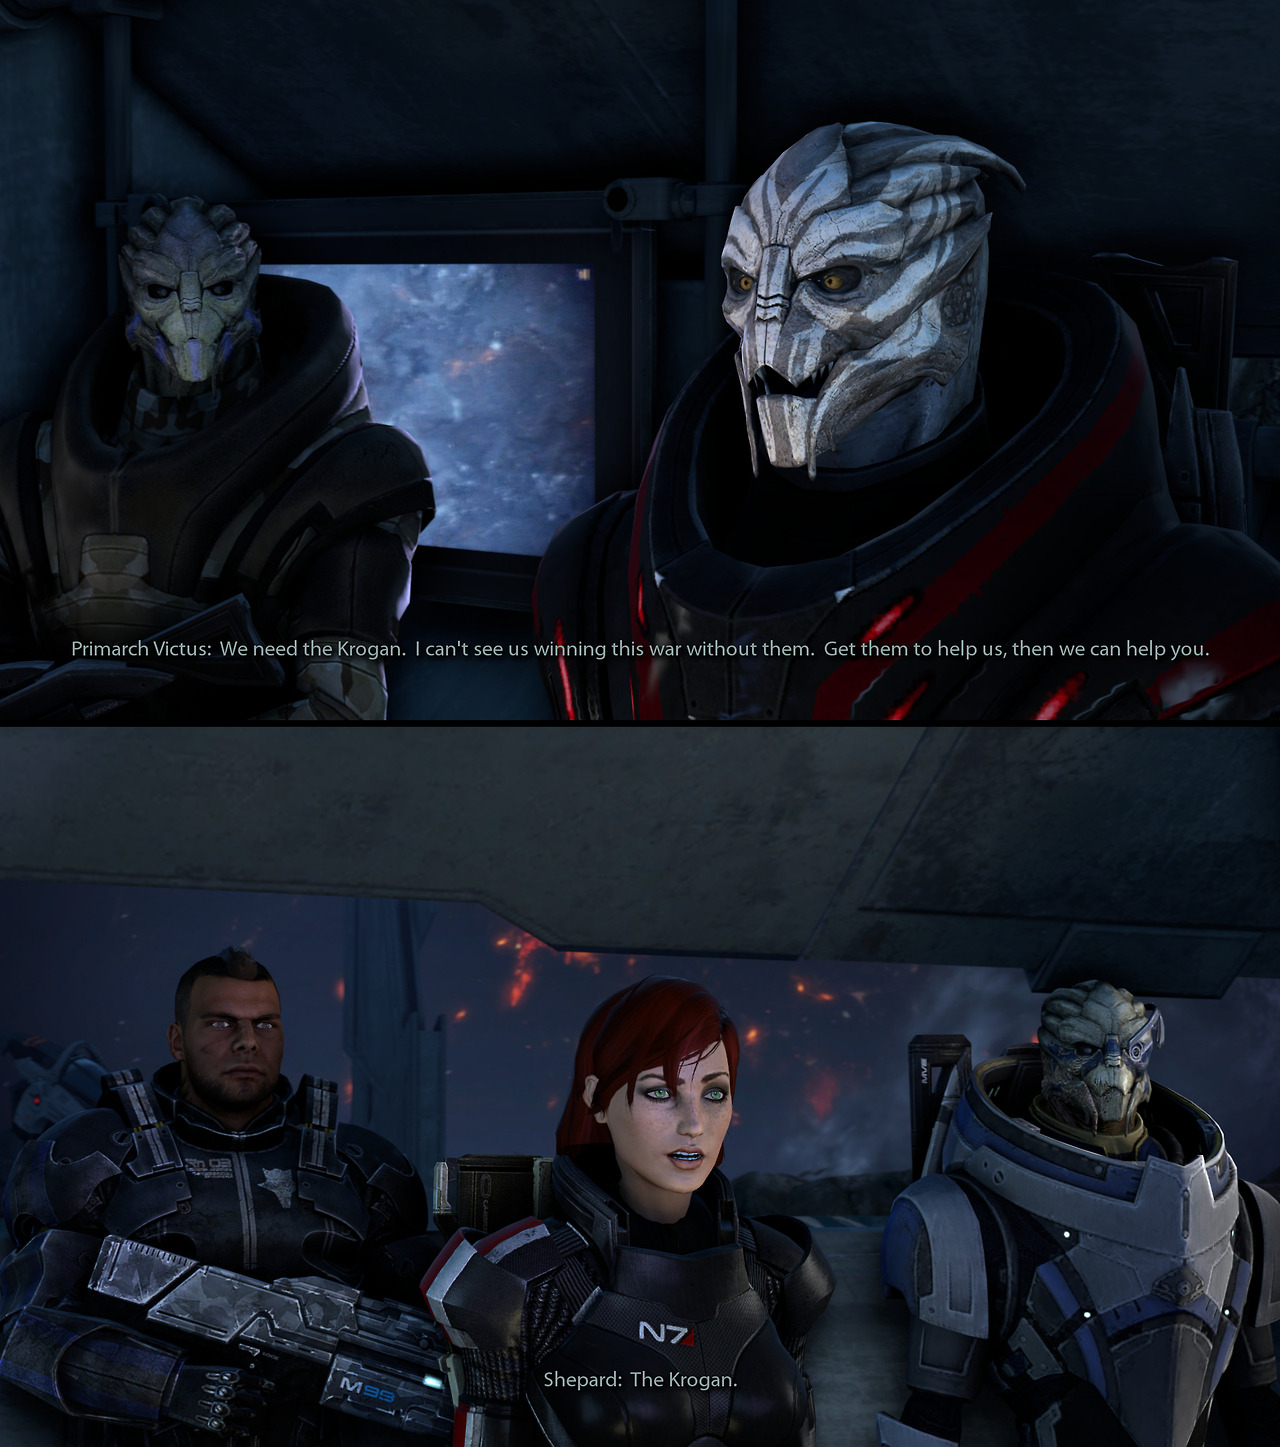 Mass Effect 3: Extortion Chapter 1: Menae1920 x 1080 renders: http://www.mediafire.com/download/zhqzpkxada9rzze/Extortion